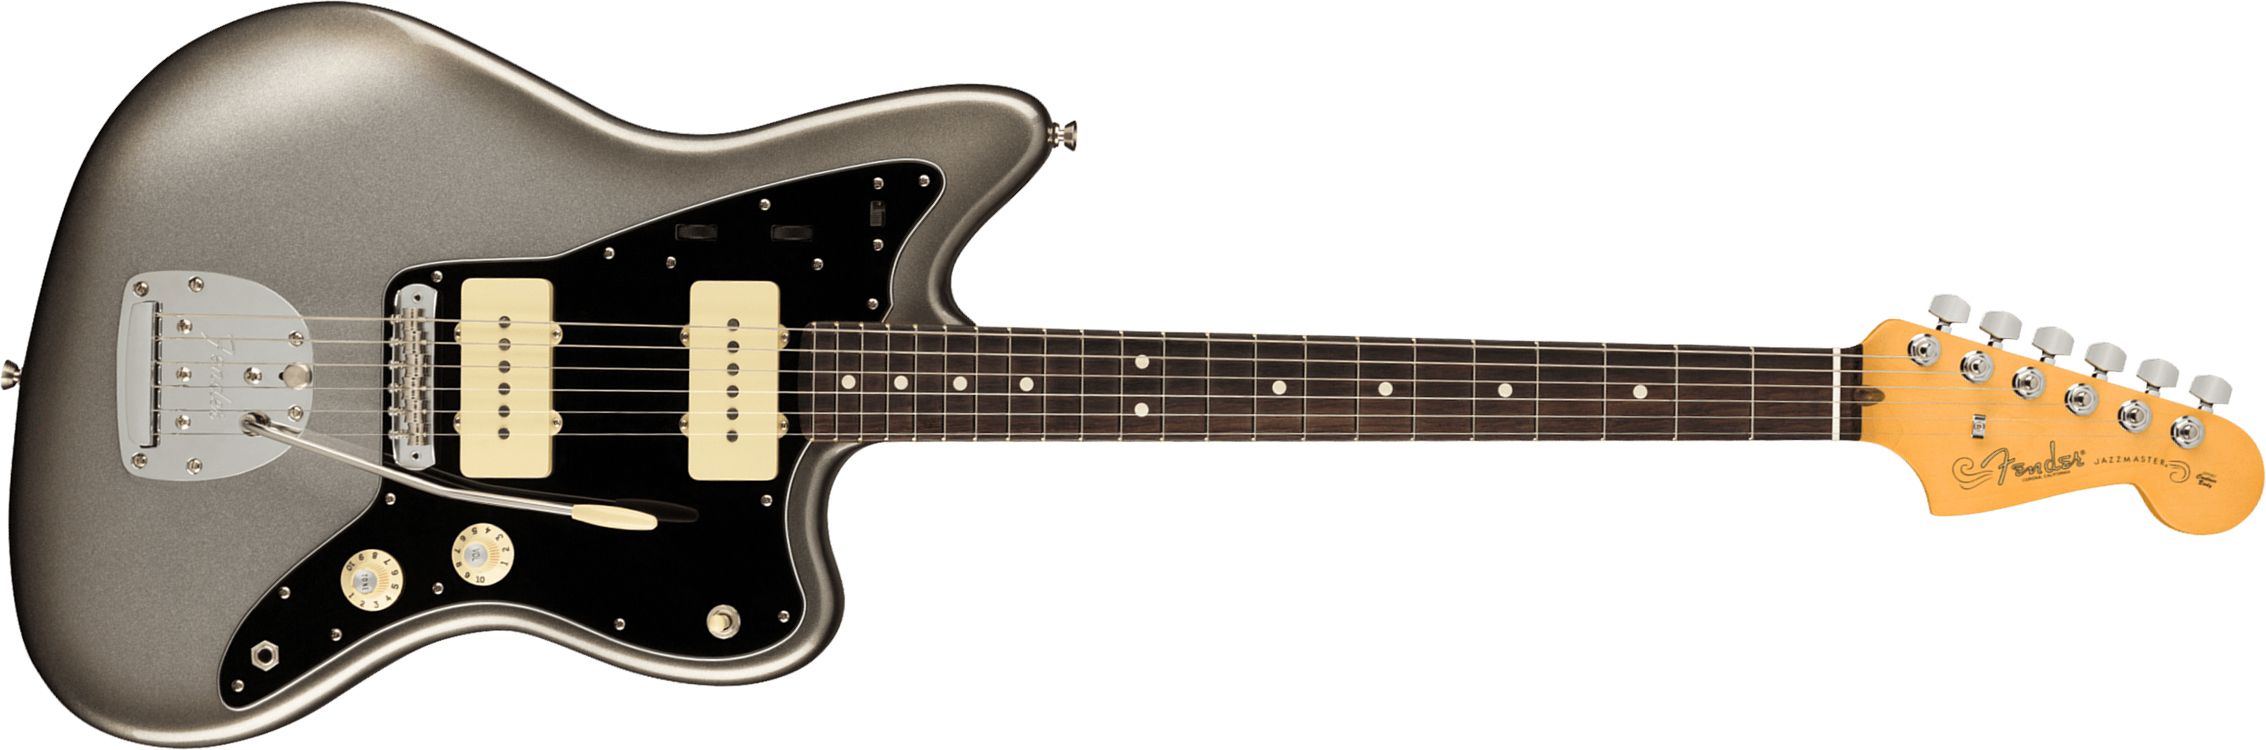 Fender Jazzmaster American Professional Ii Usa Rw - Mercury - Retro rock electric guitar - Main picture